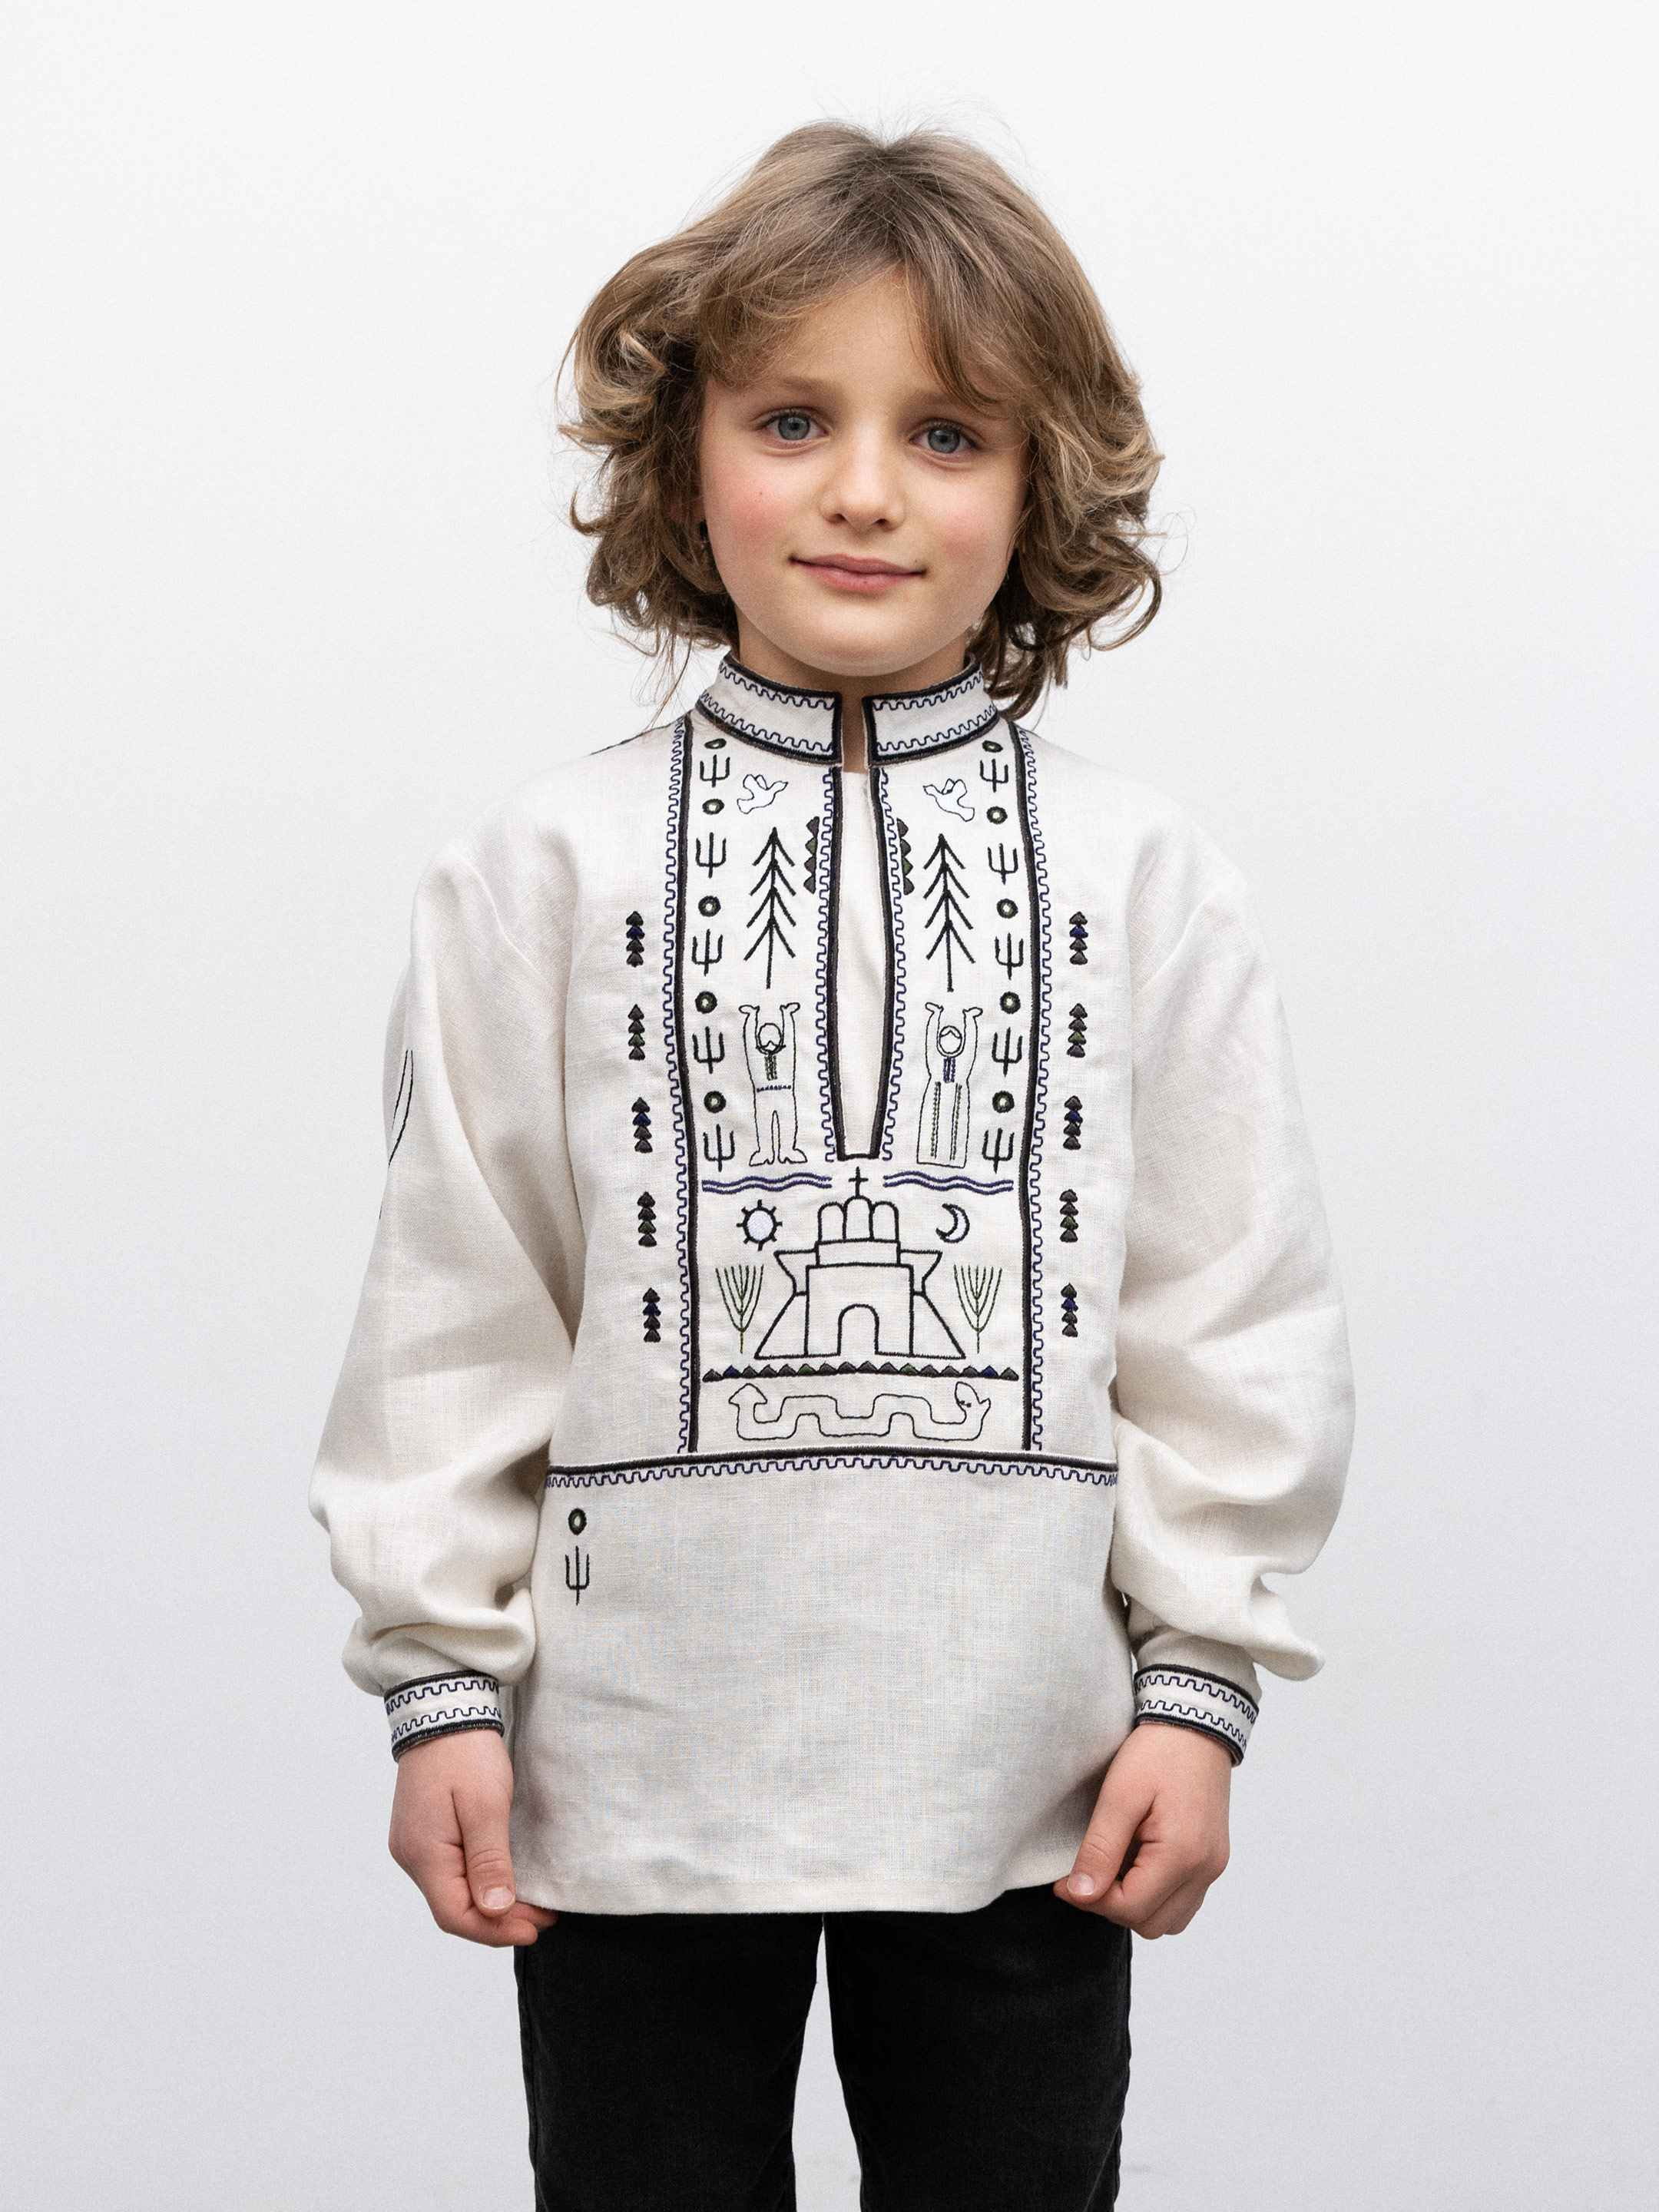 Embroidered shirt for a boy Kyrylo Kozhumiaka - photo 2